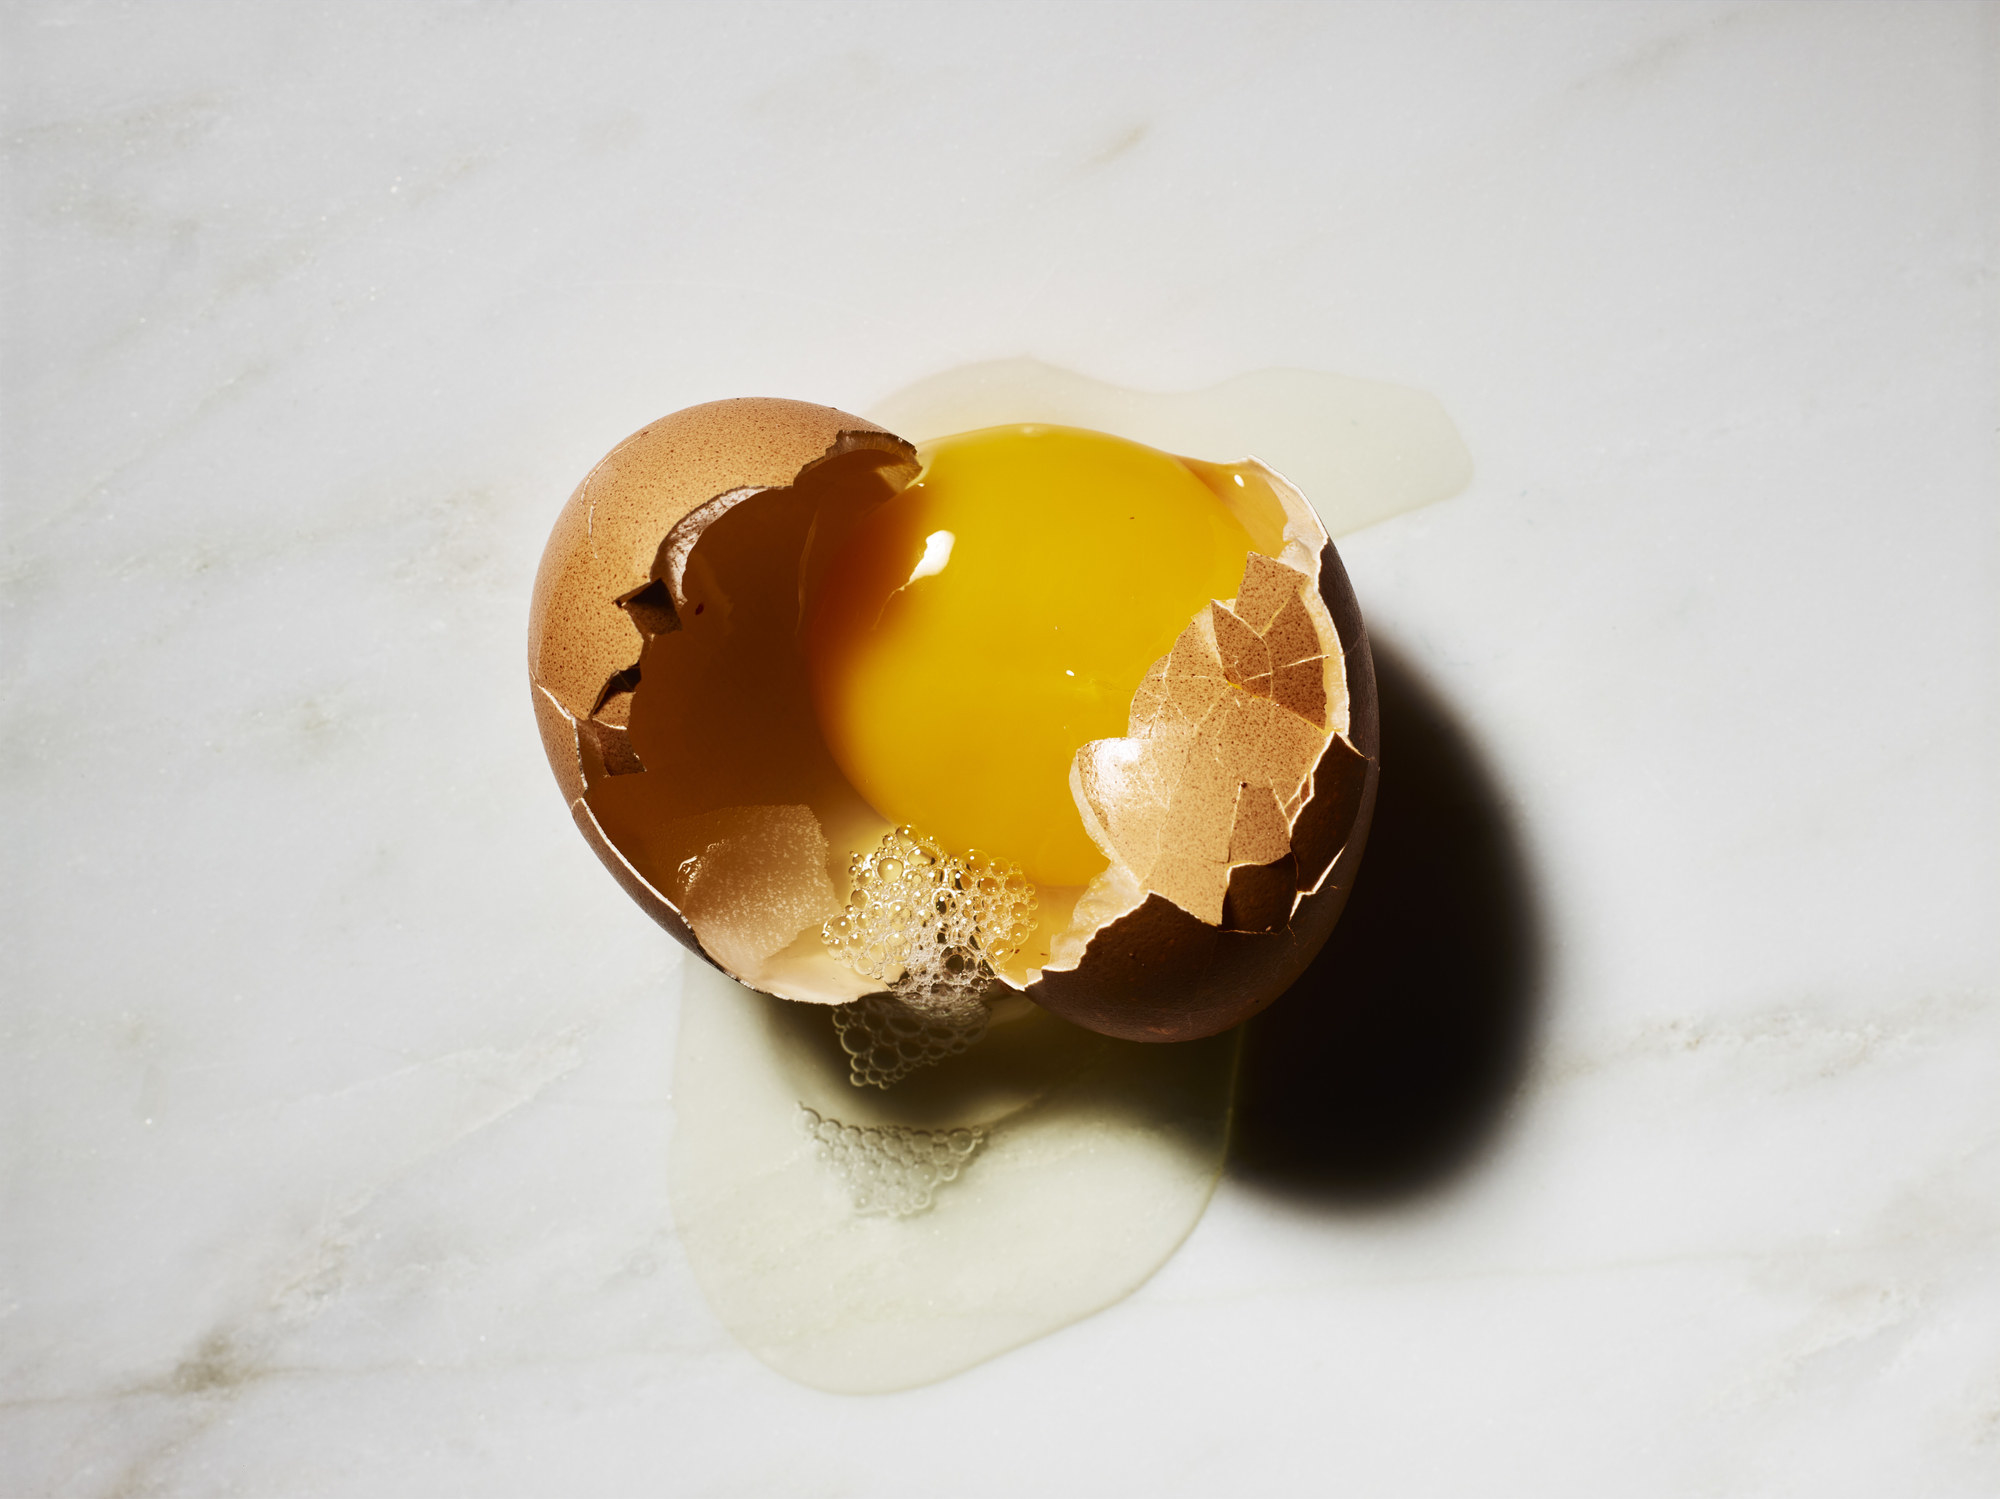 A cracked egg